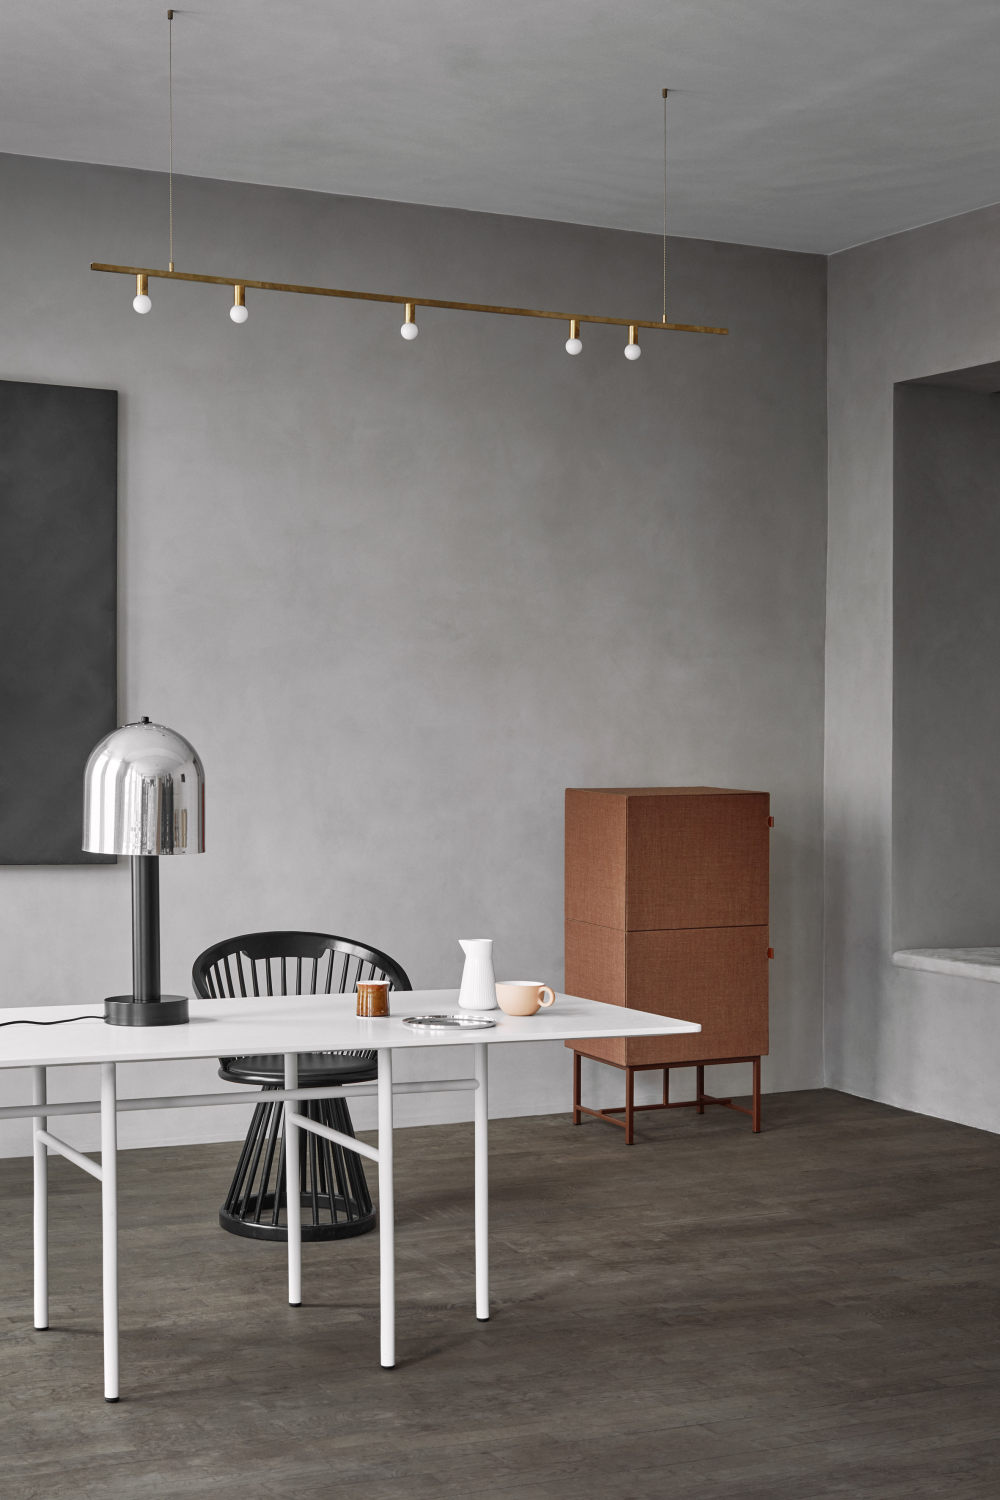 tone-cabinets-norm-architects-zilenzio-design-furniture-cabinets_rushi_hero.jpg